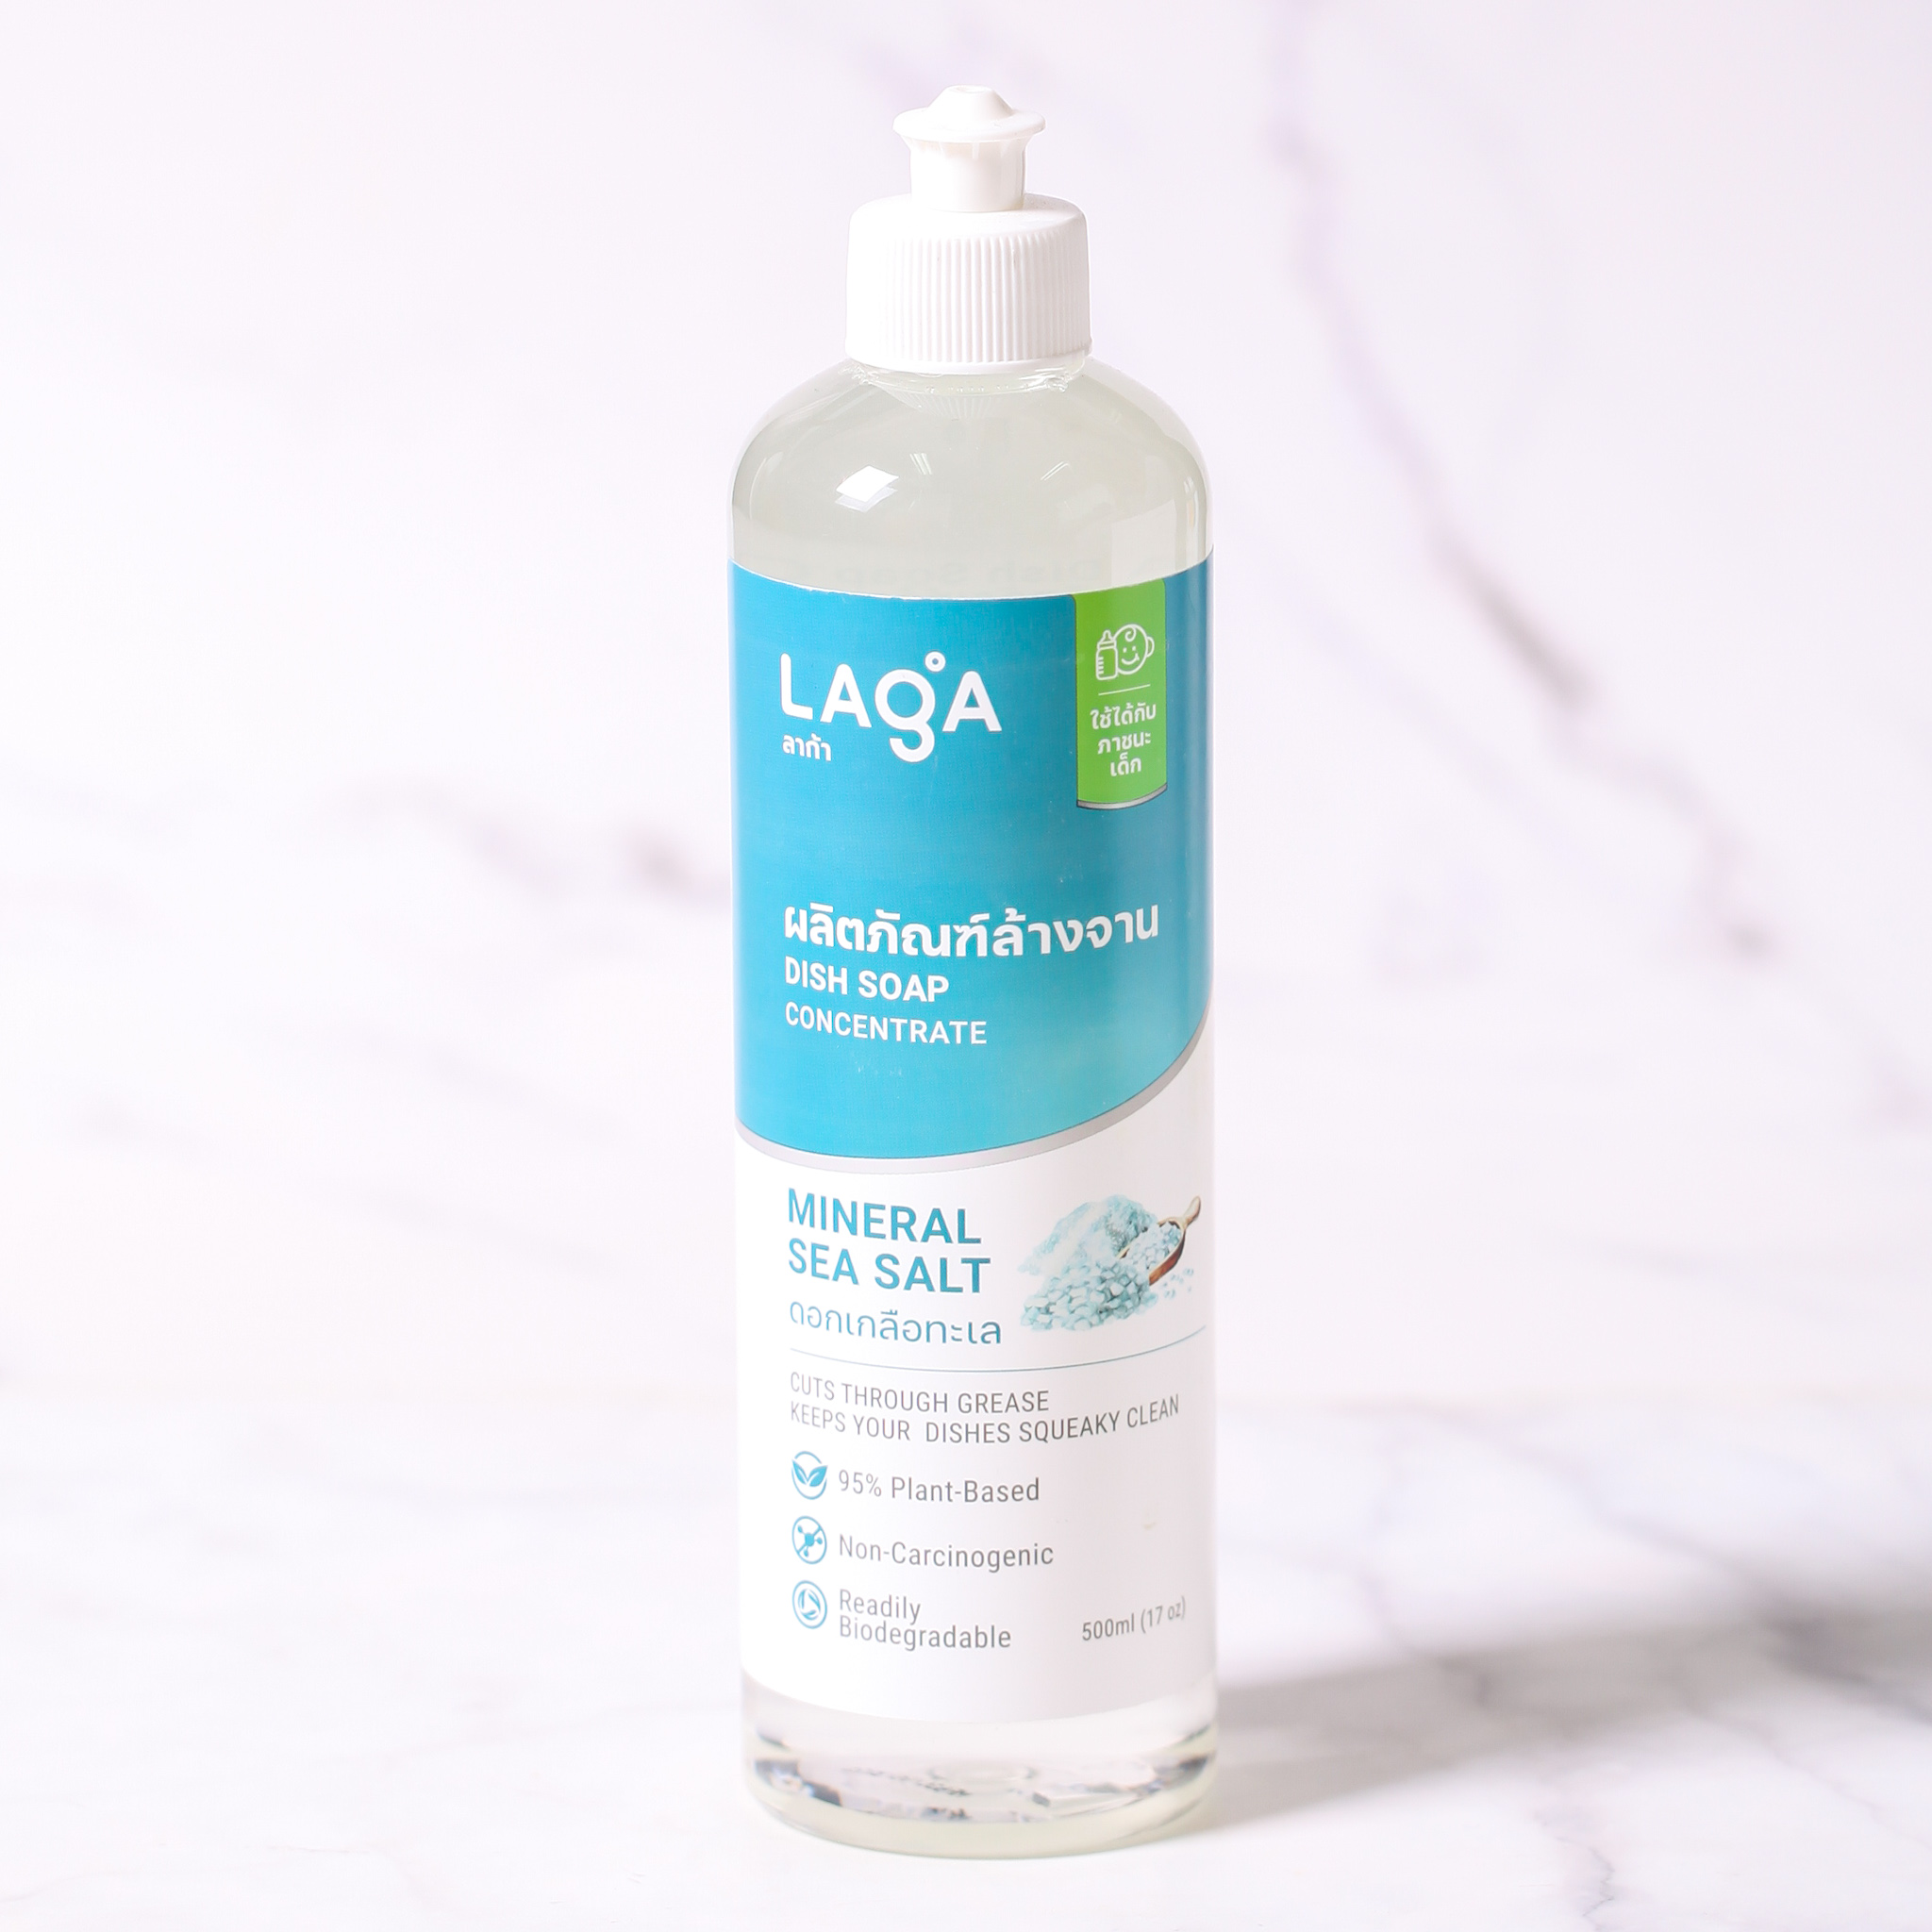 LAGA Natural Dish Soap Concentrate, Mineral Sea Salt